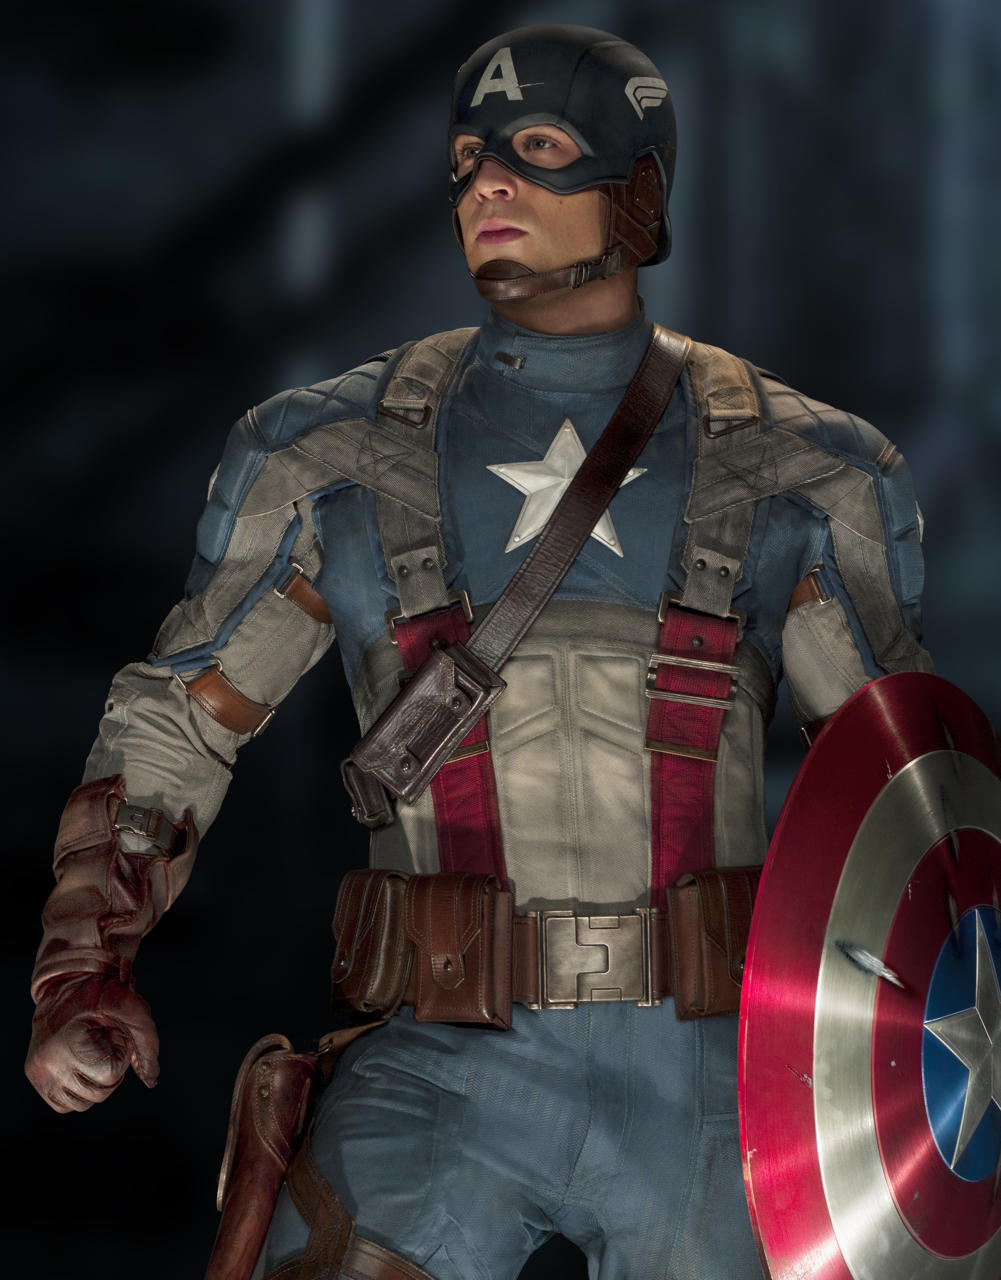 6. Captain America: The First Avenger (Metacritic Score: 66)